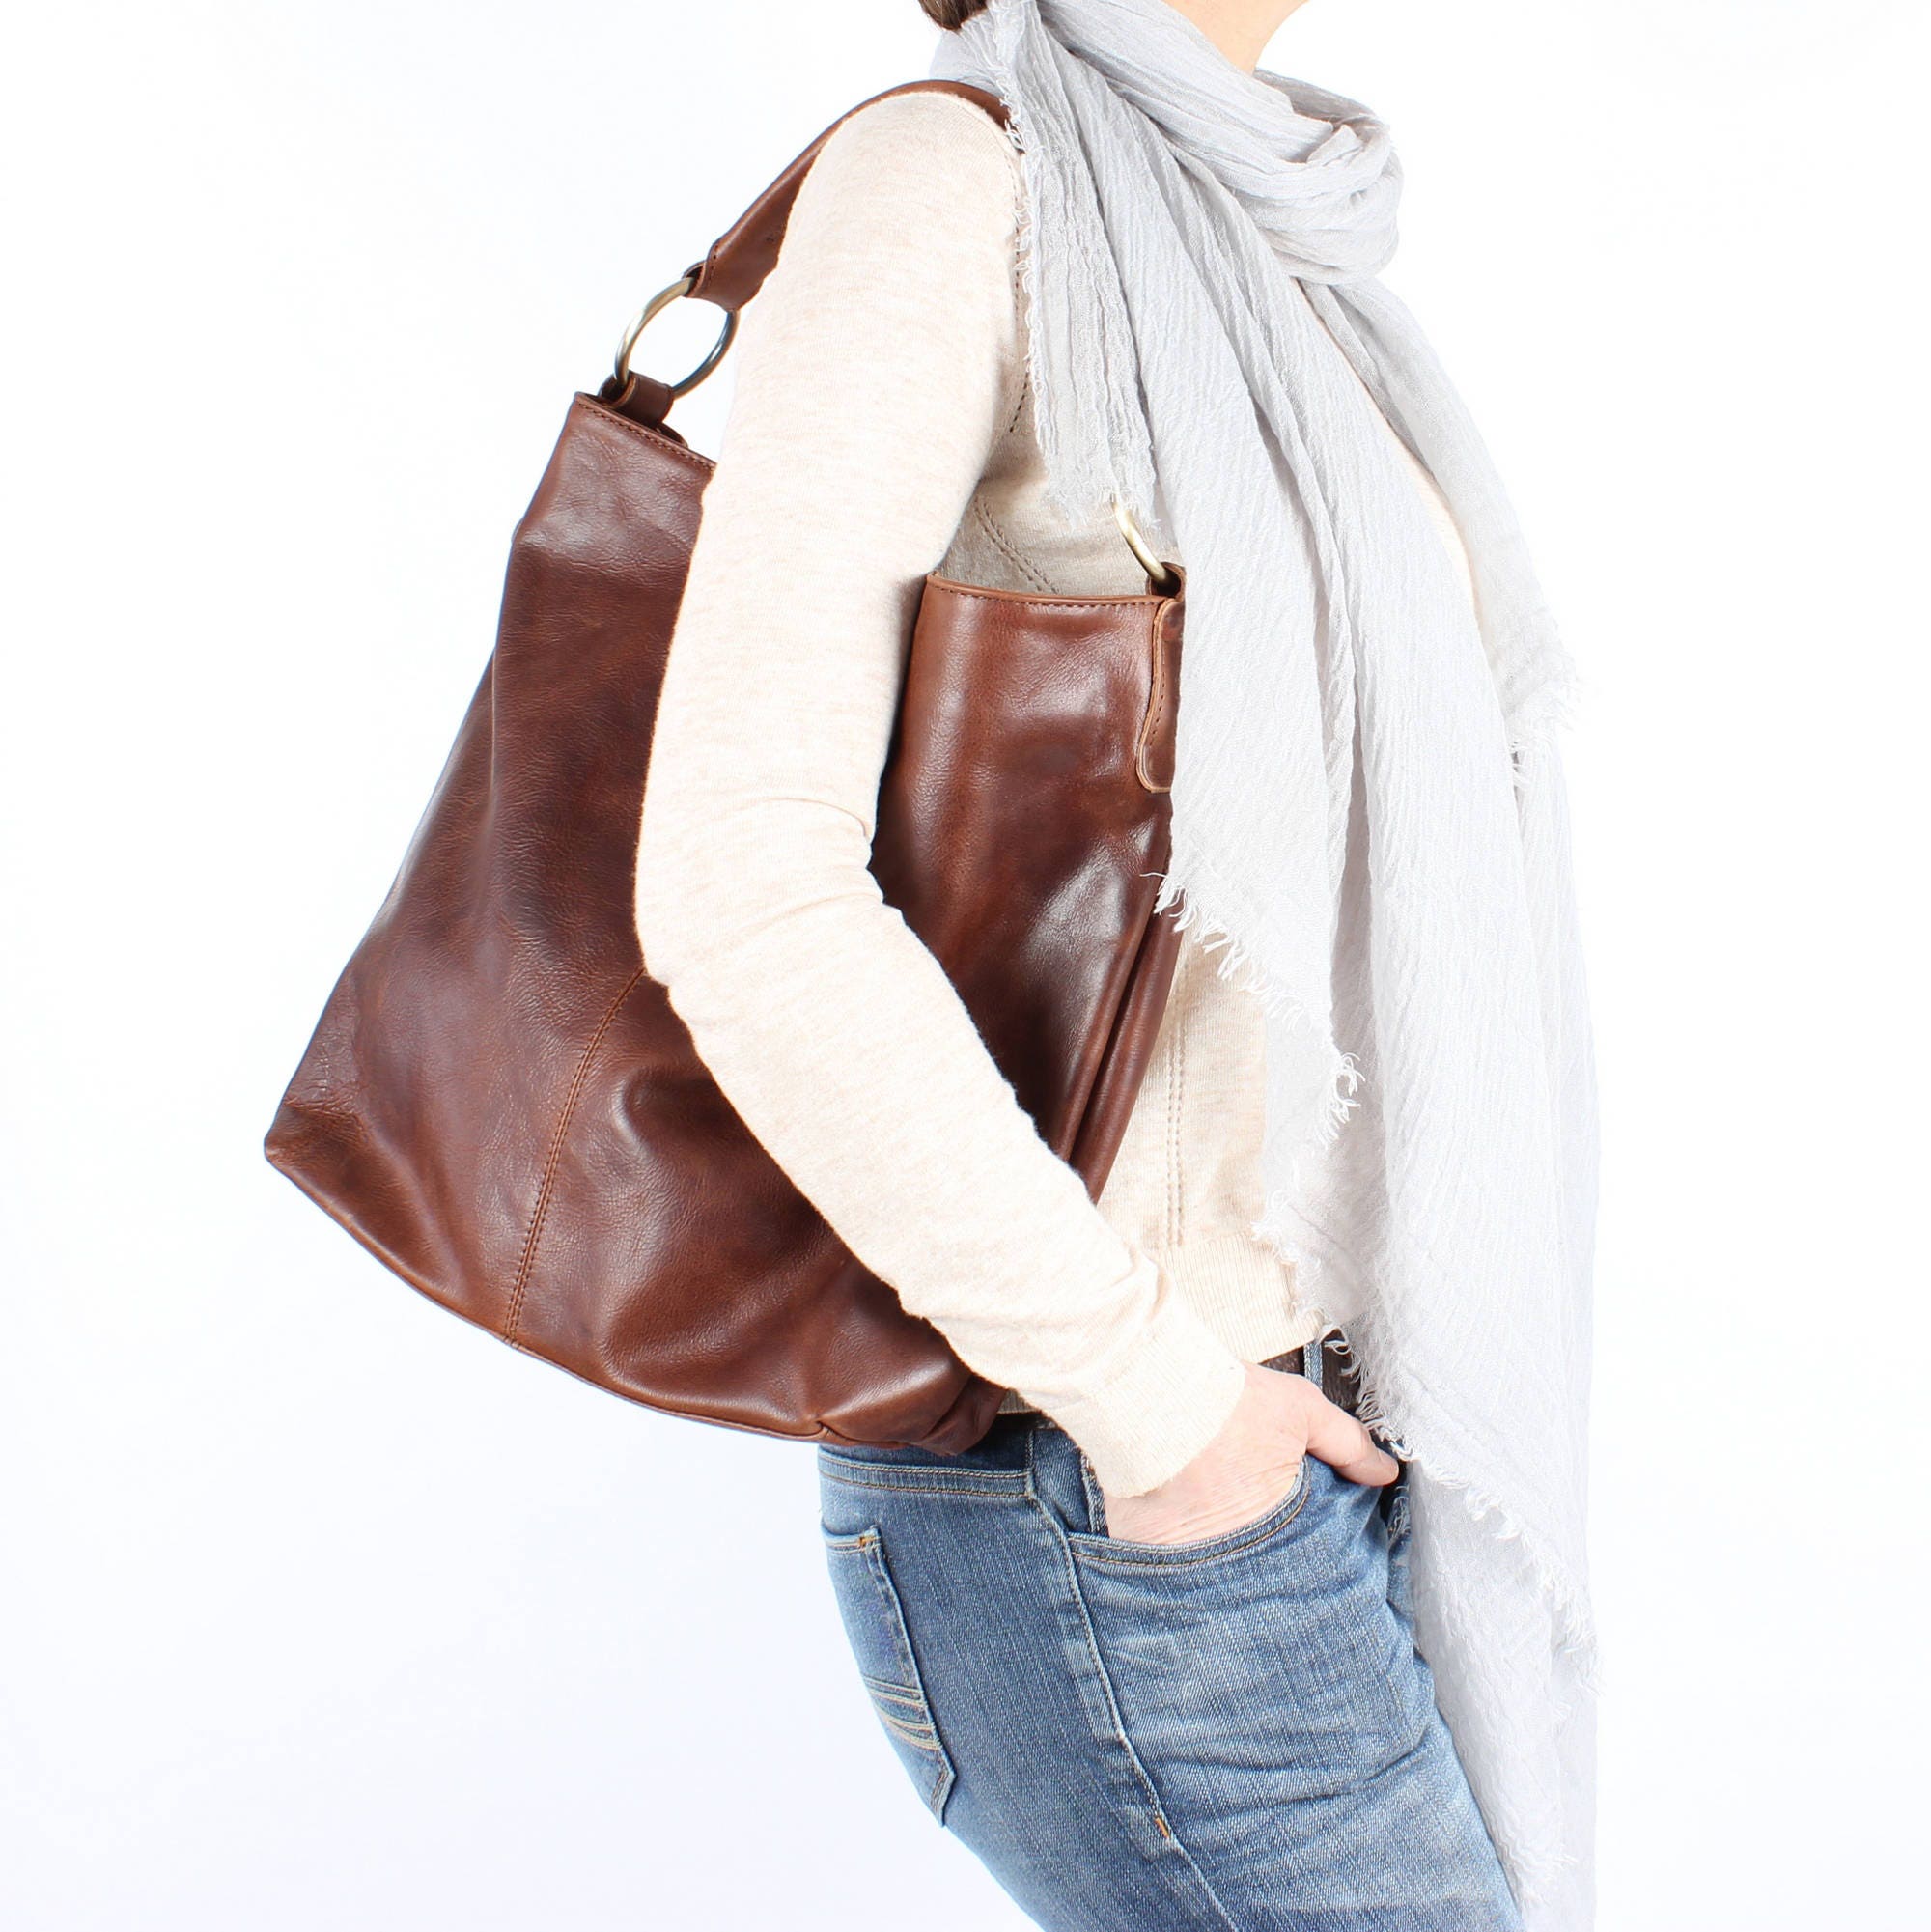 Distressed Brown Leather Handbag Hobo Tote Purse